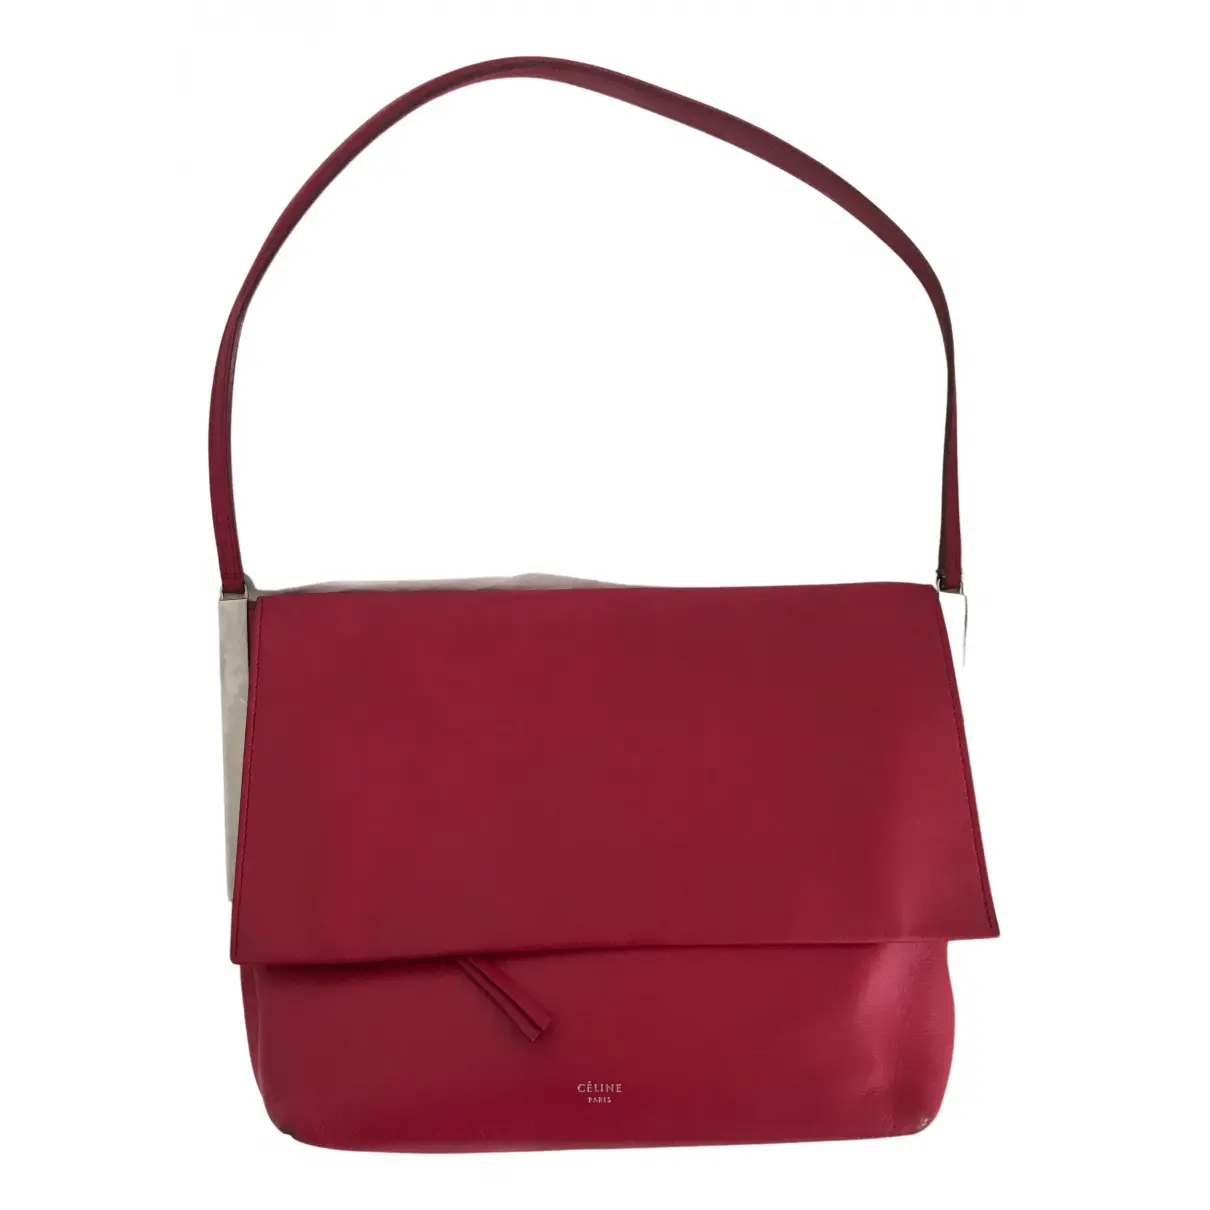 Clasp leather handbag Celine